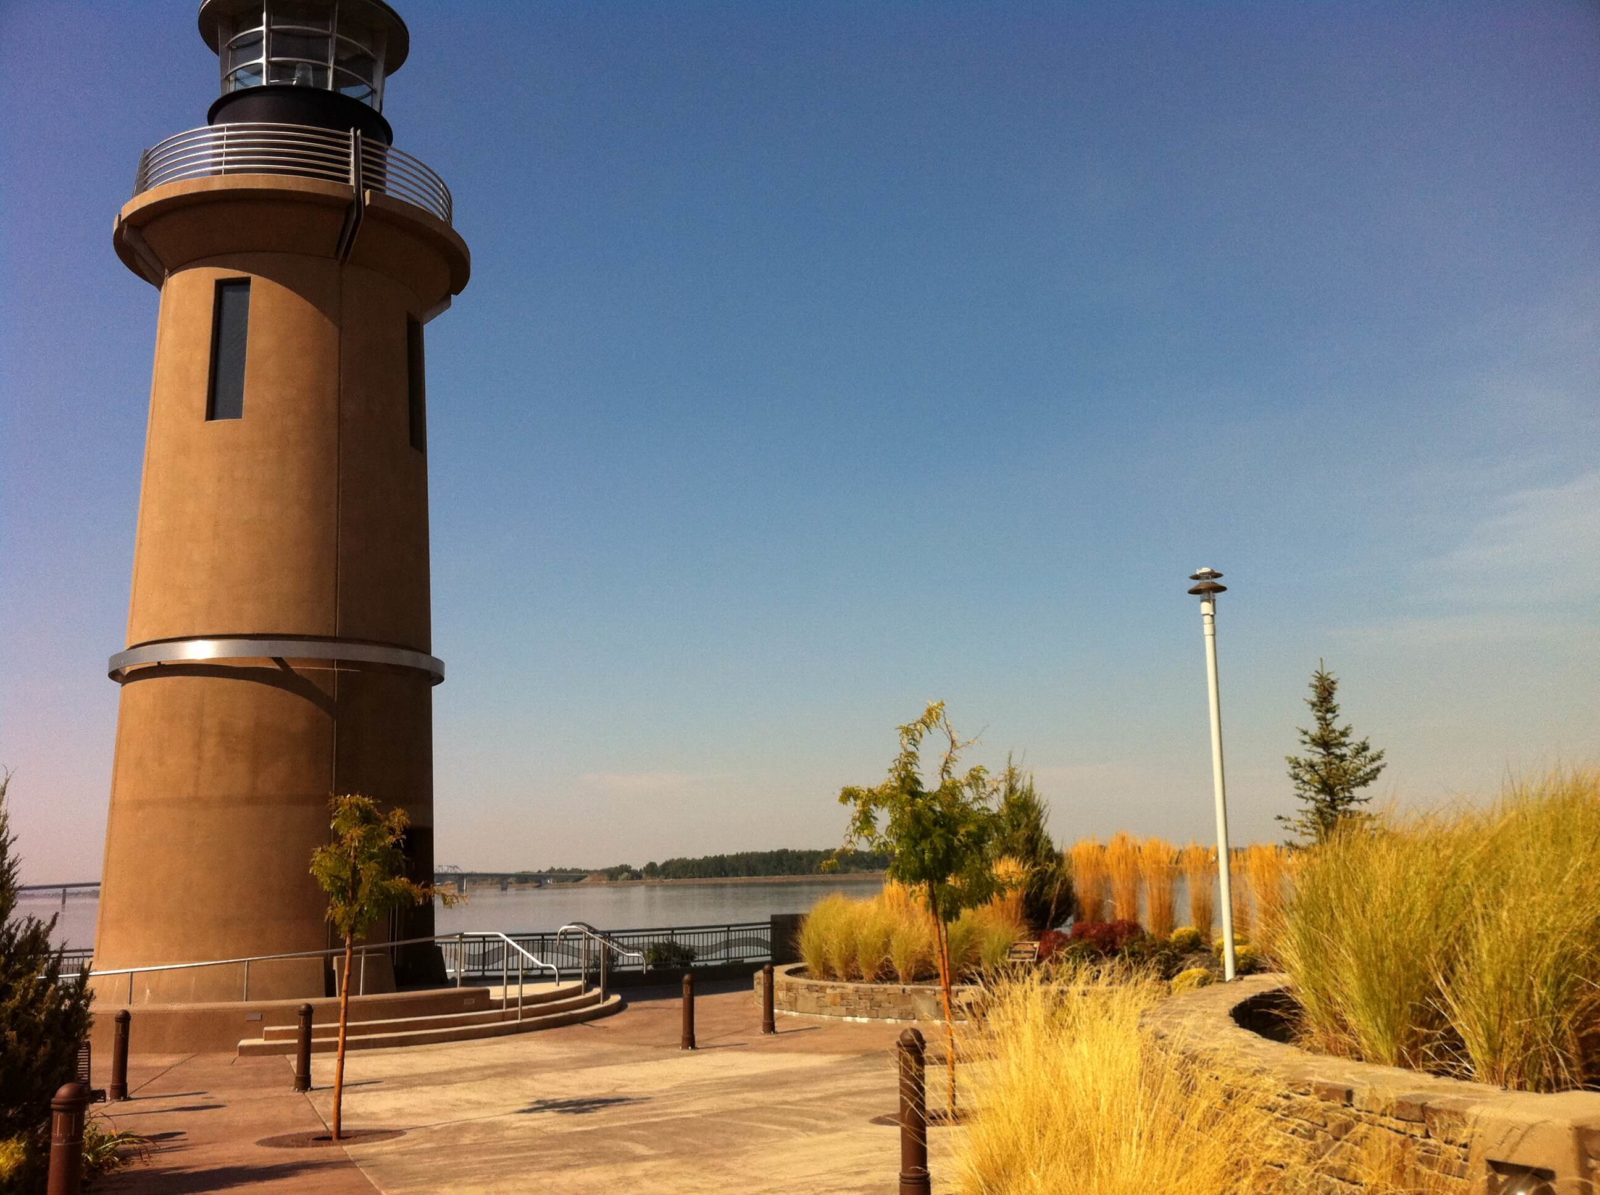 Clover Island Lighthouse and Lighthouse Plaza.